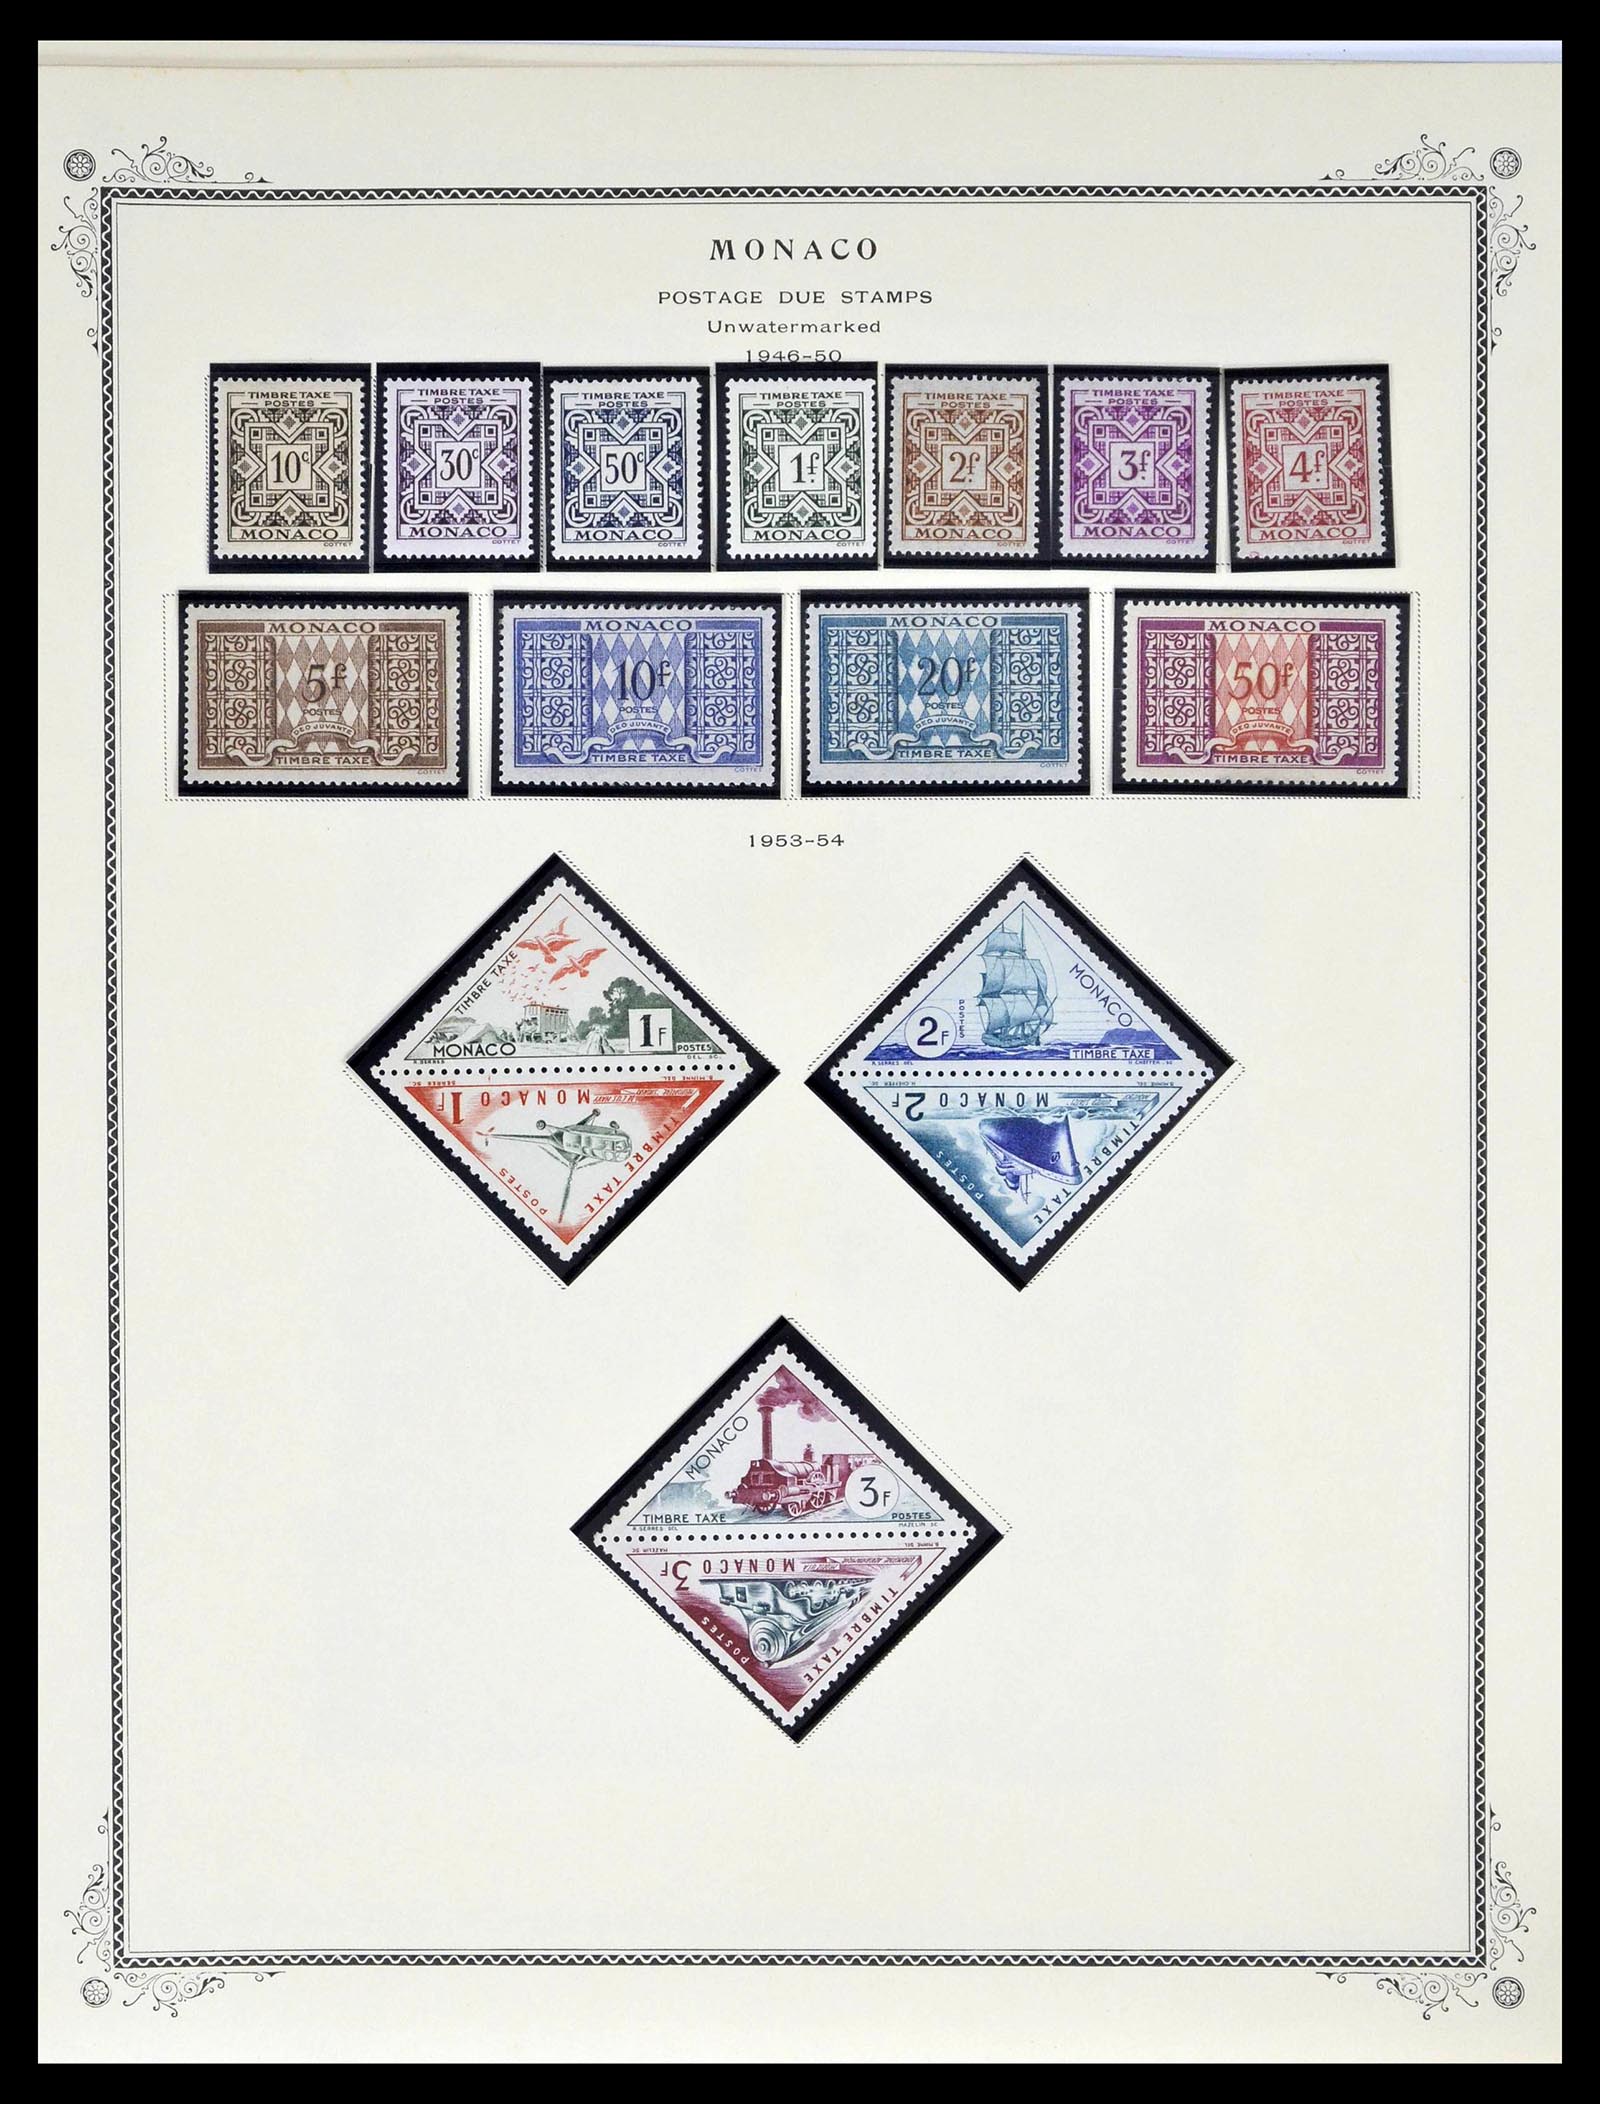 39181 0165 - Stamp collection 39181 Monaco 1885-1980.